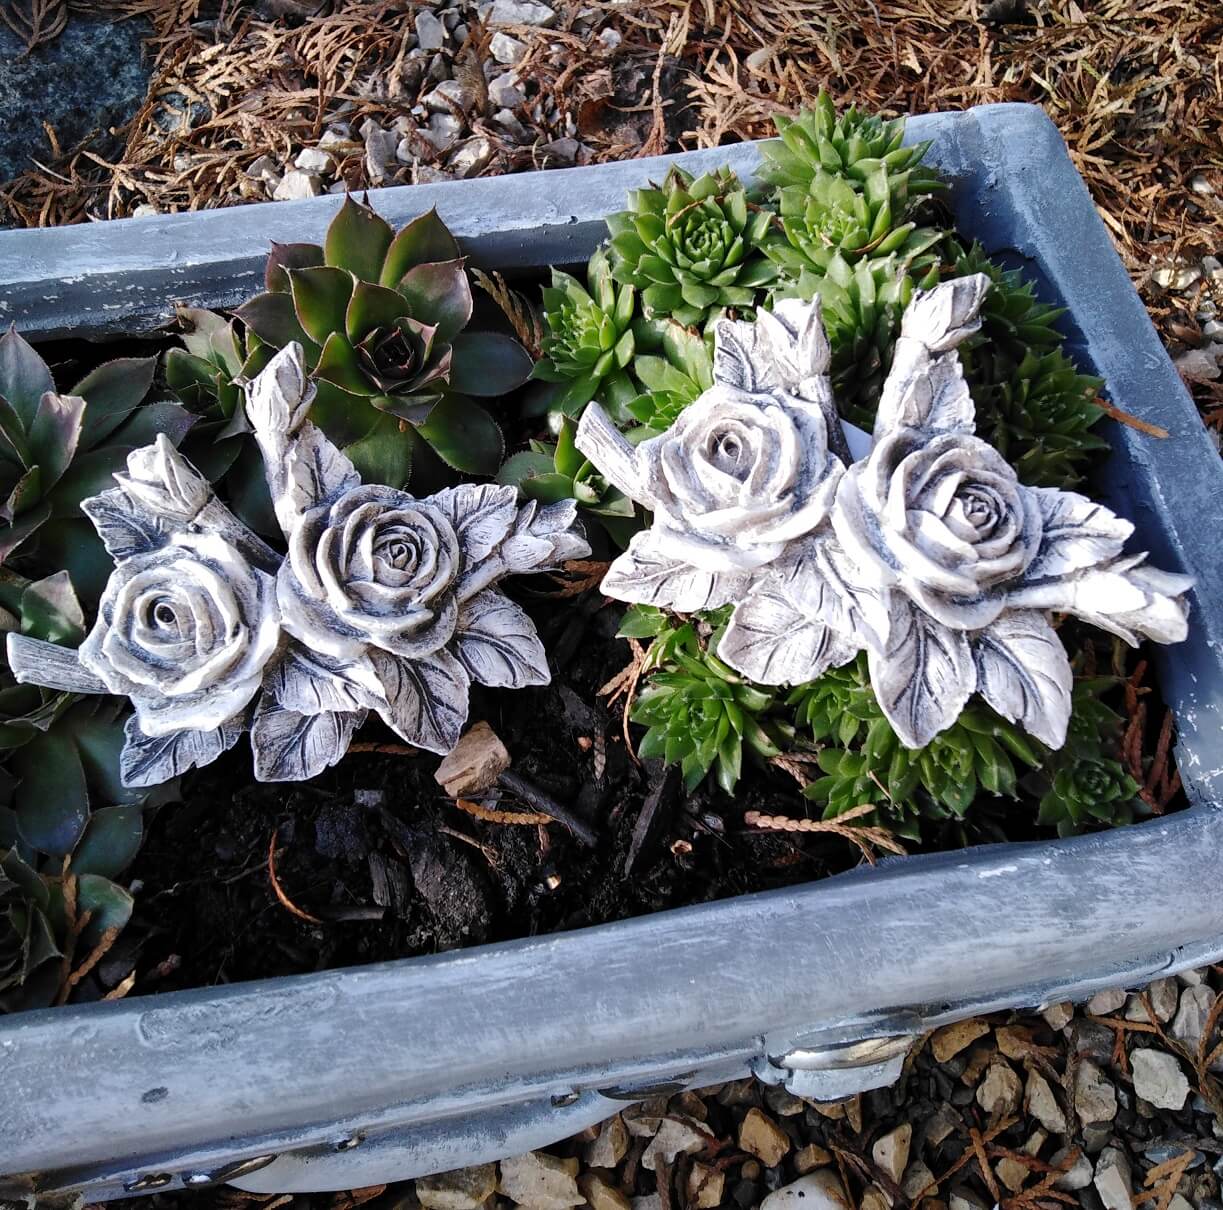 2 x Rose Rosen Rosenblüten Rosenbouquet mit Blätter auch Grabdekoration Grabschmuck wetterfest